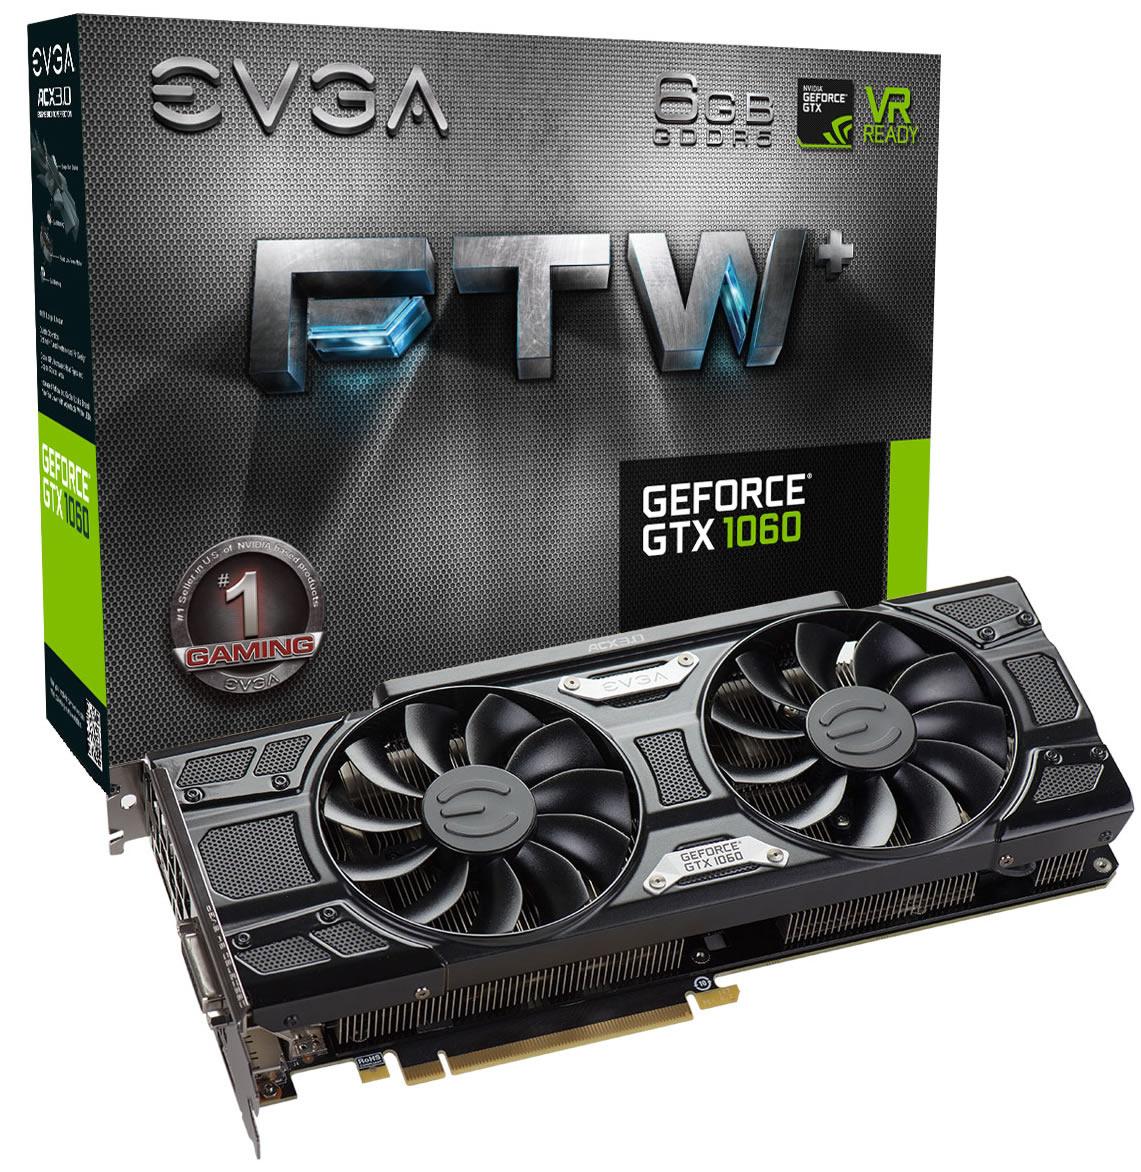 EVGA GeForce GTX 1060 6 GB FTW+ Gaming